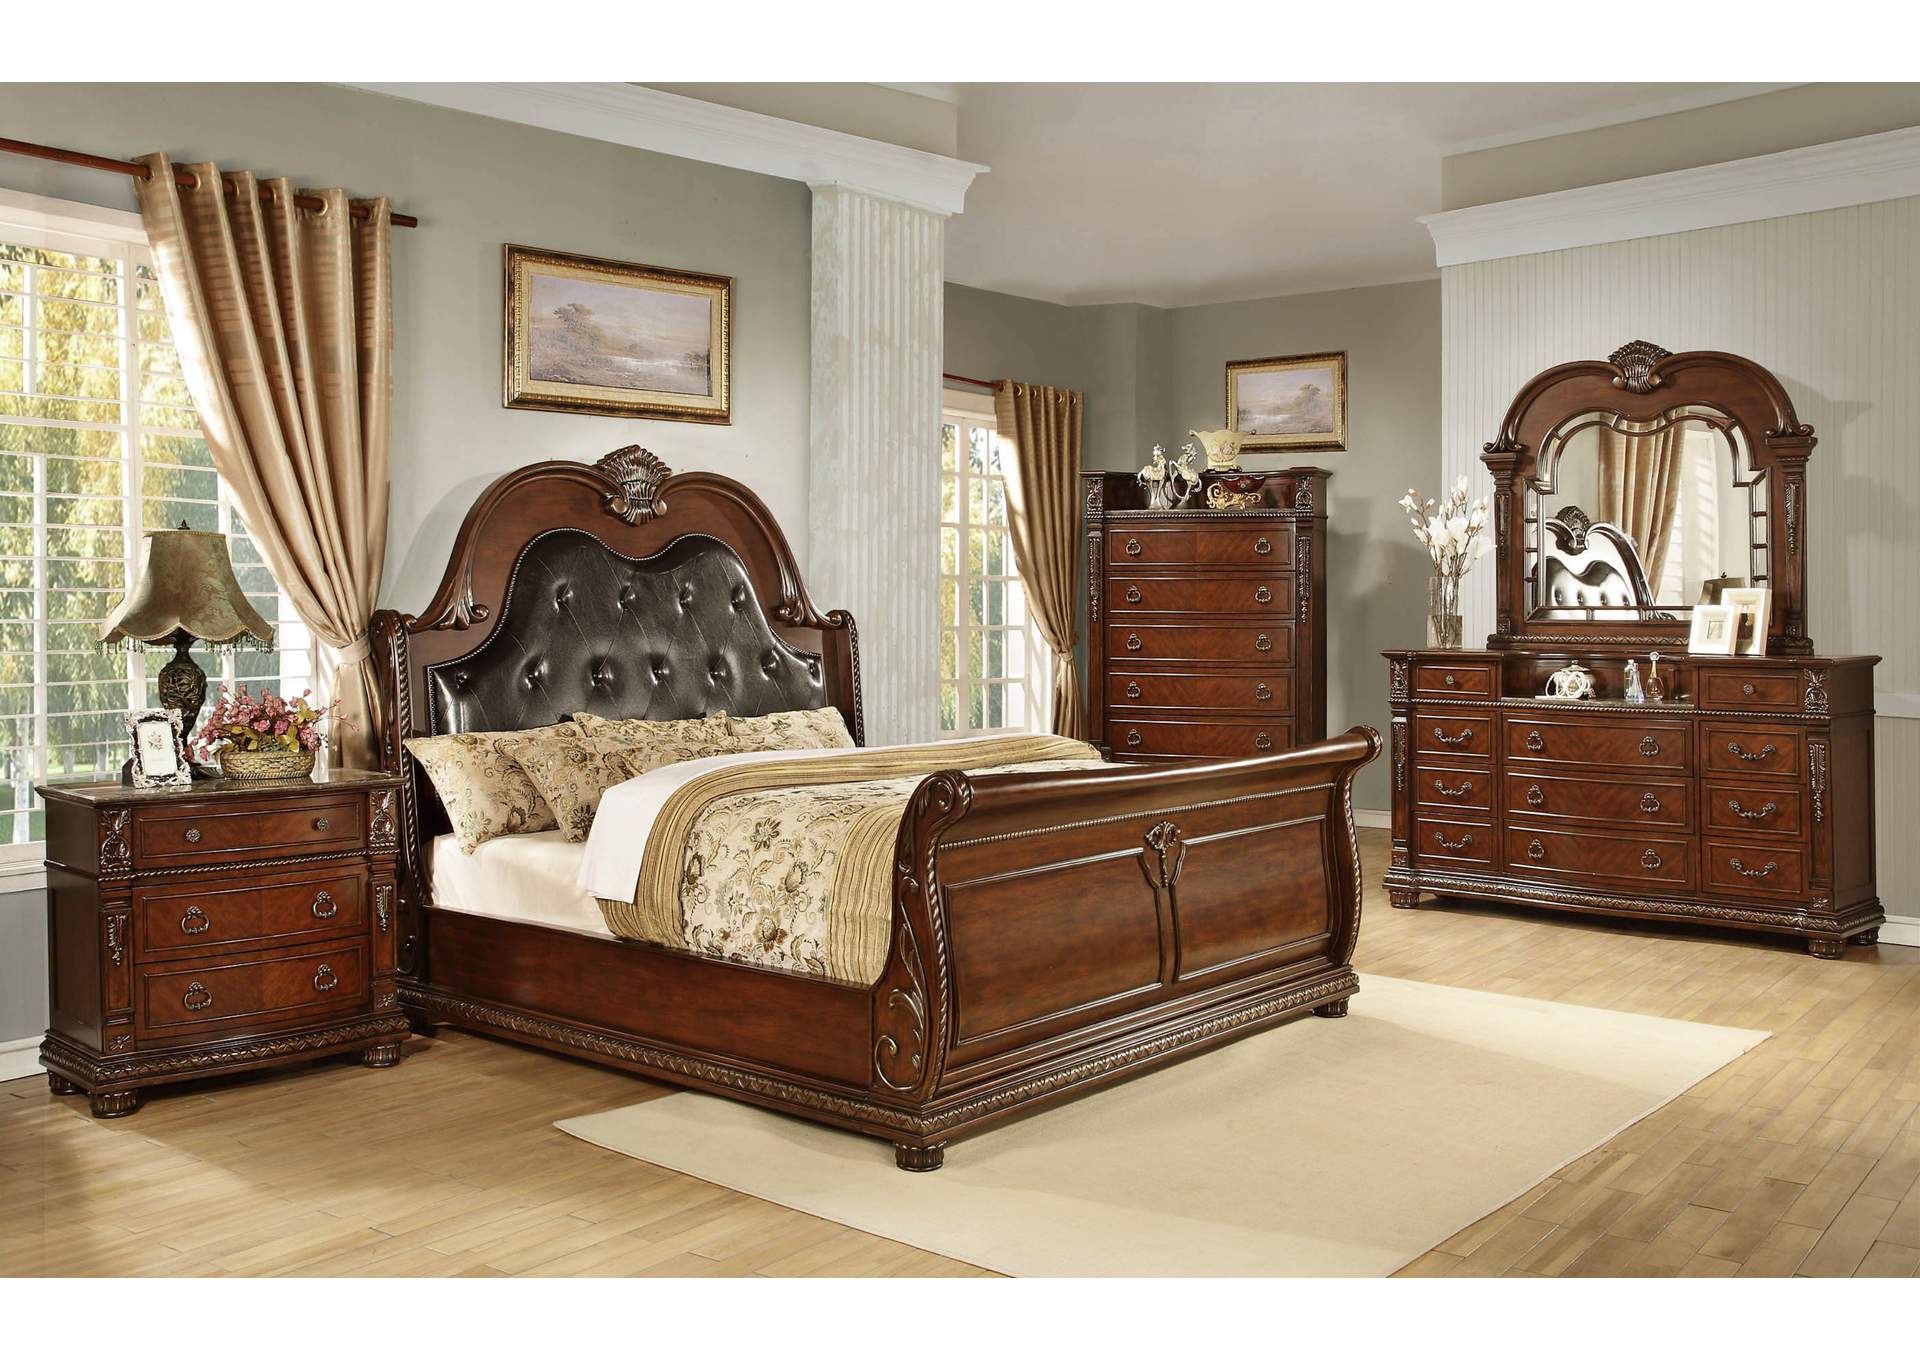 Lakeleigh Brown Sleigh Queen 4 Piece Bedroom Set W/ Chest, Dresser & Mirror,Global Trading